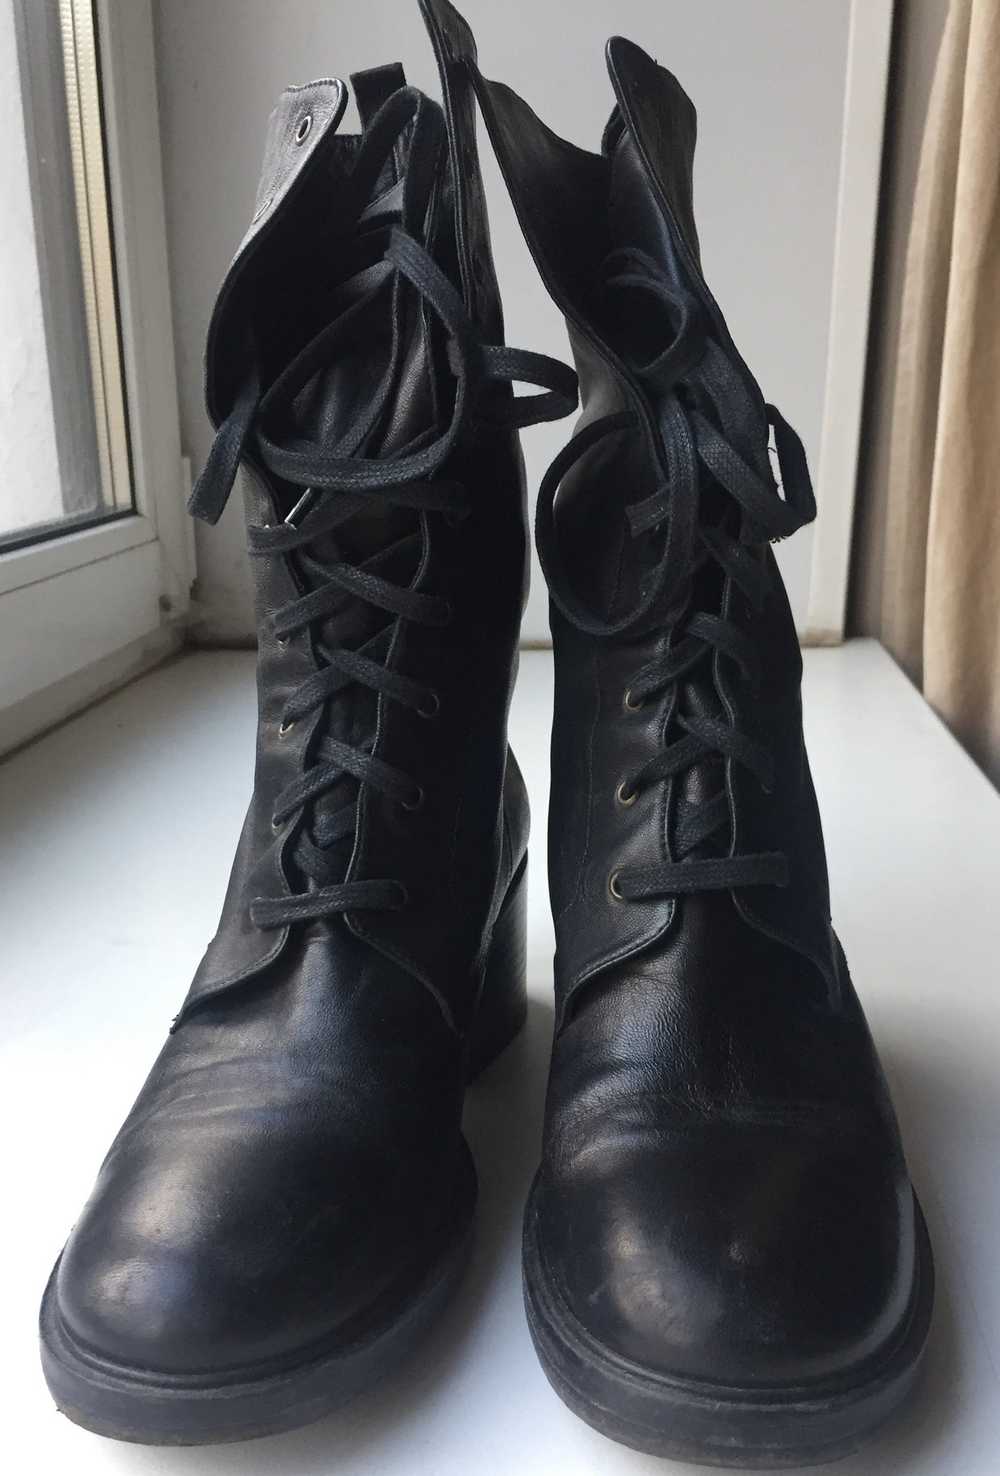 A.F. Vandevorst leather lace-up boots - image 4